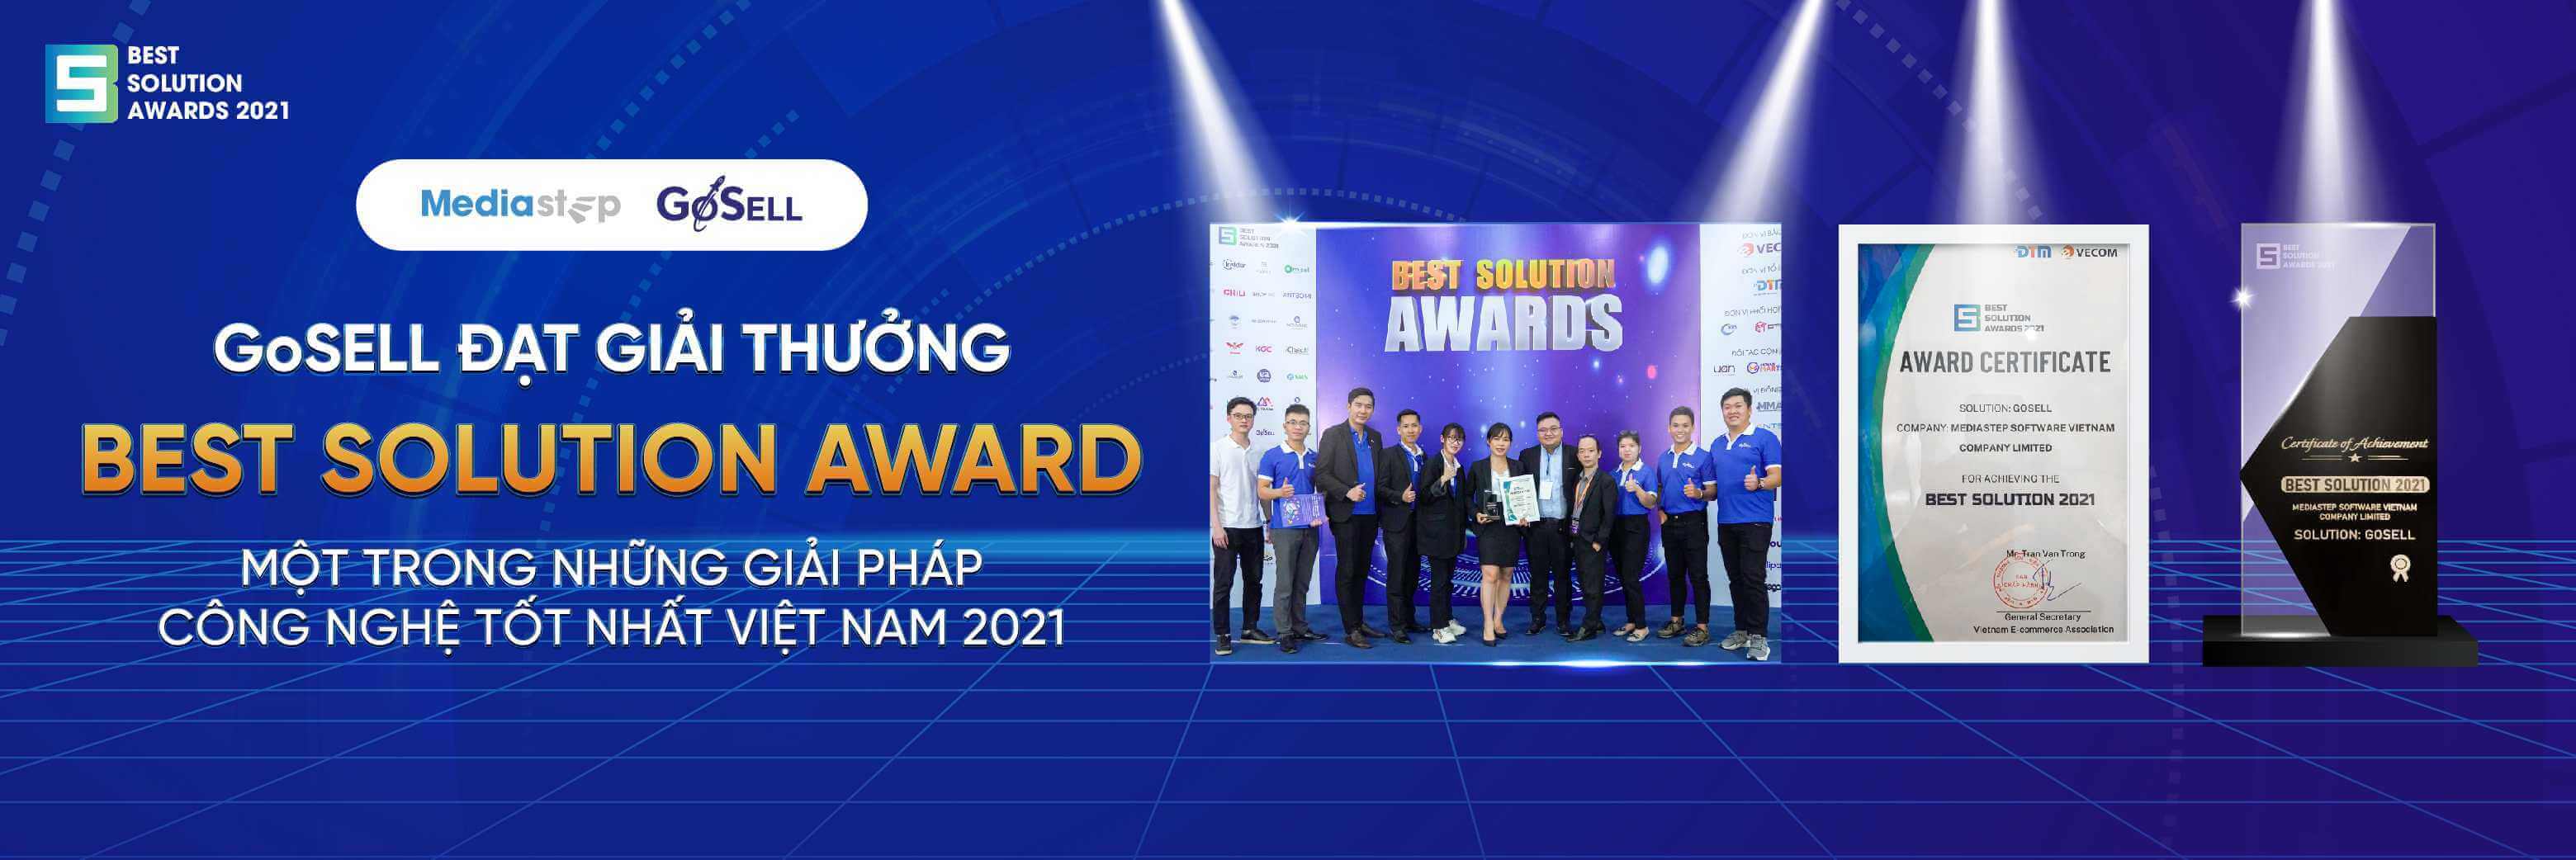 Best Solution Award 2021